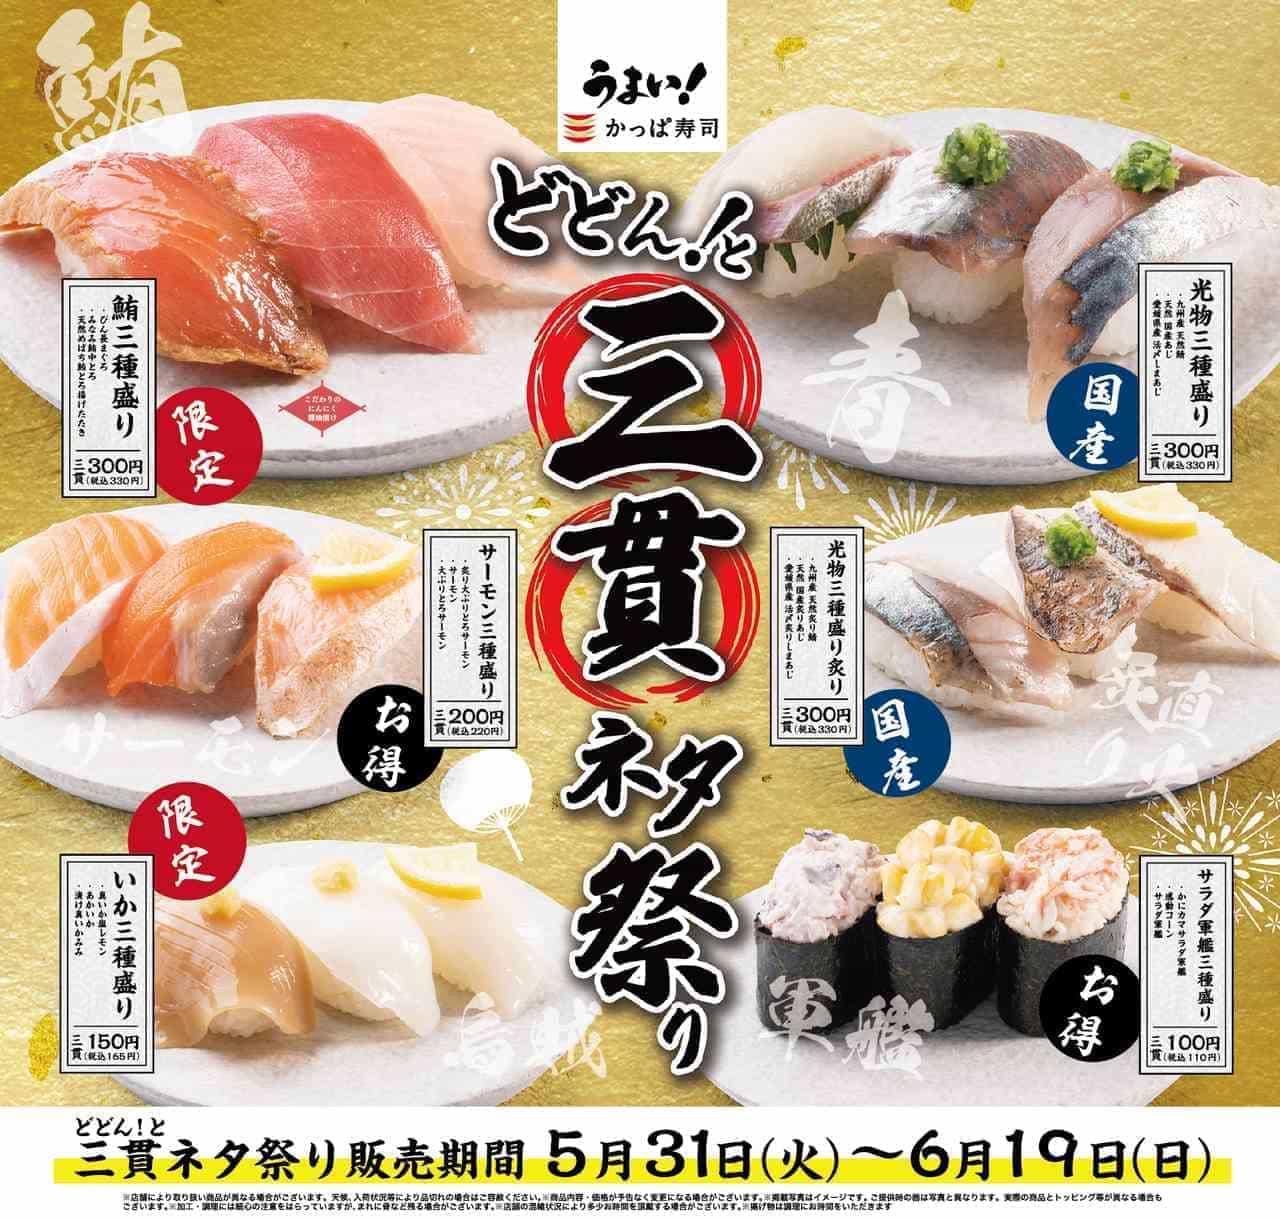 Kappa Sushi "Dodo! and Sanukan Neta Matsuri Festival".